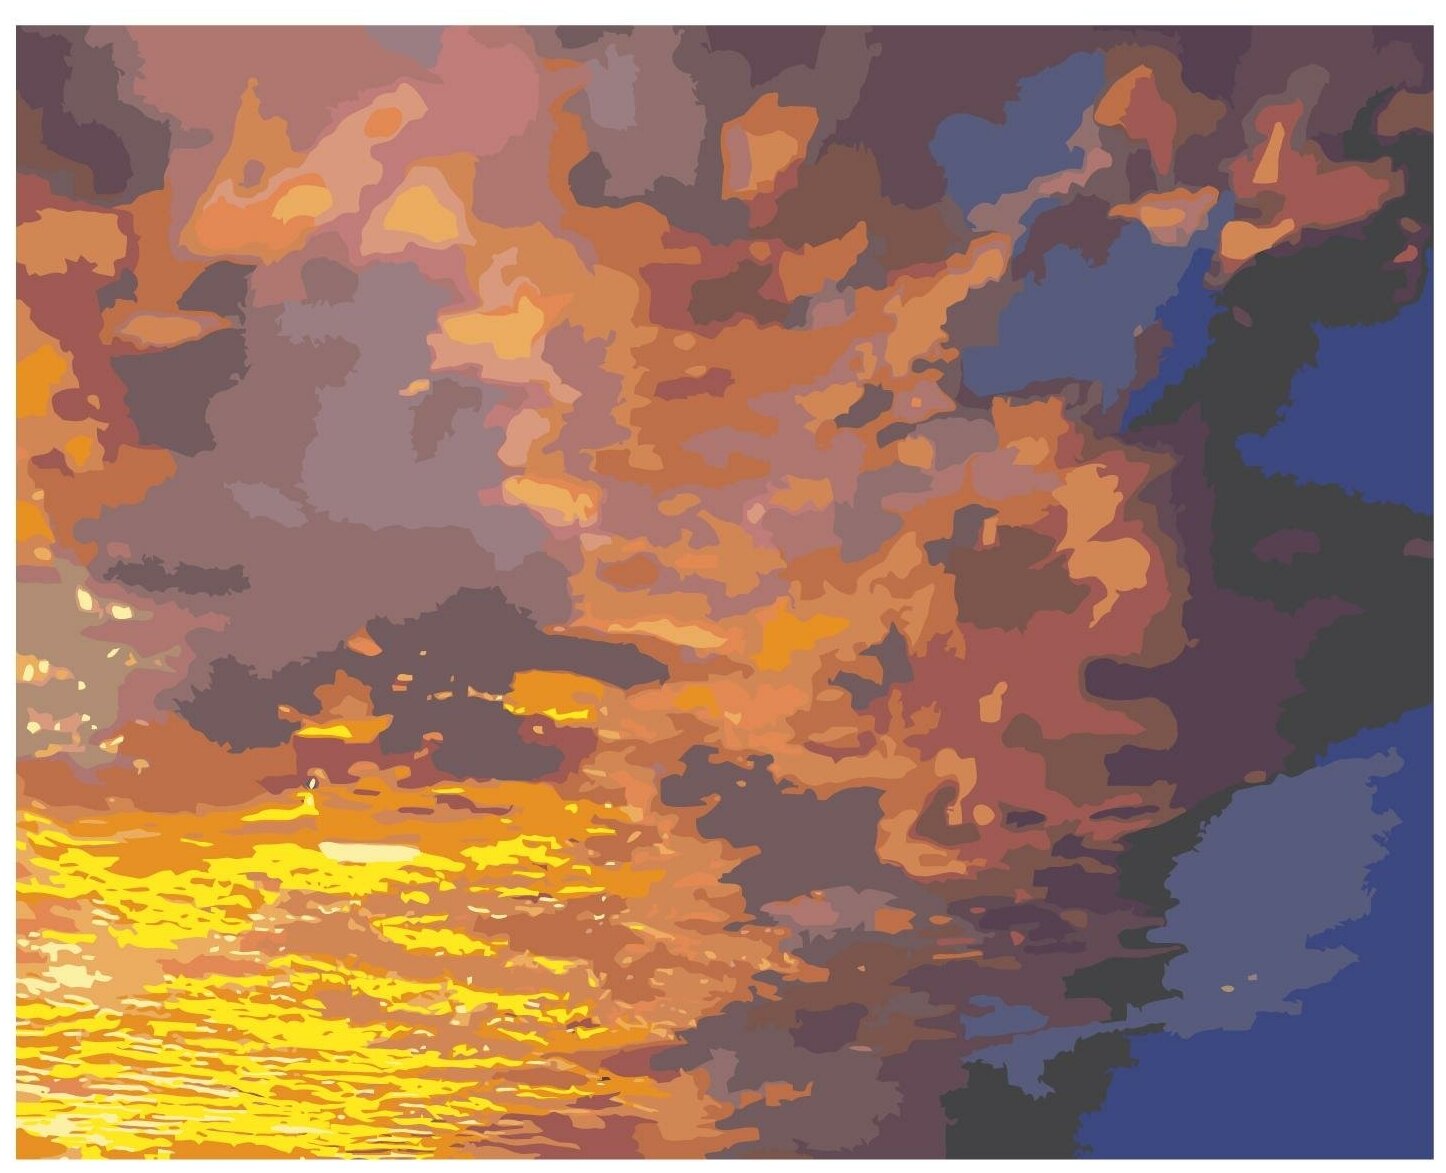 Картина по номерам, "Живопись по номерам", 40 x 50, ets497-4050, закат, небо, облака, пейзаж, Яркие цвета